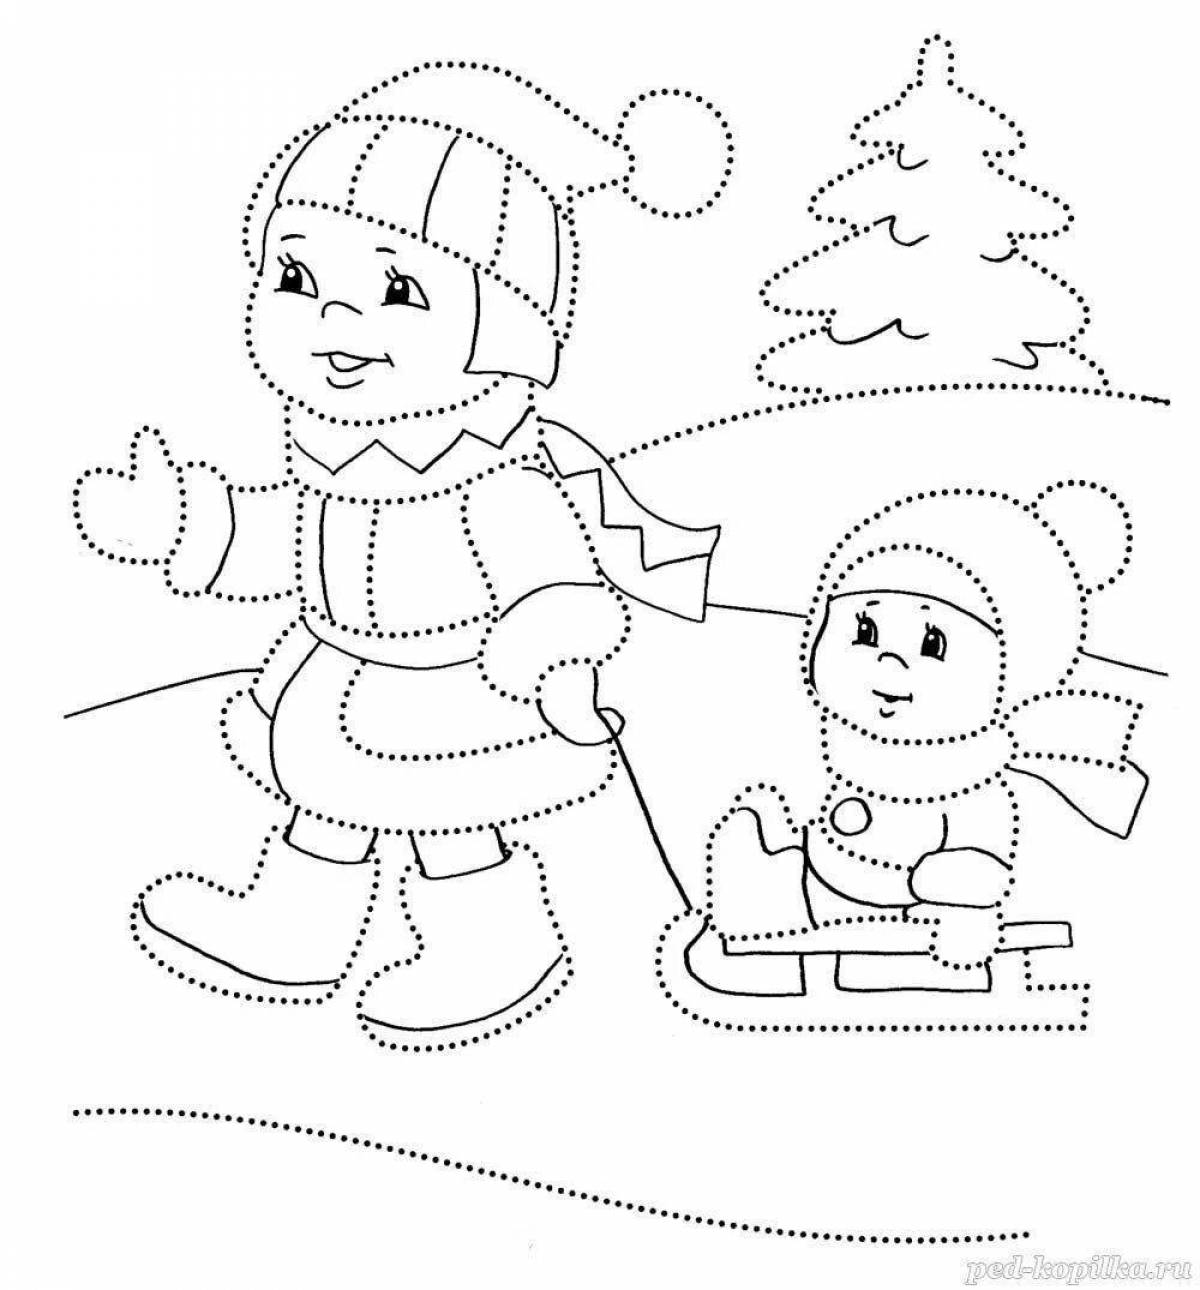 Delightful winter drawing